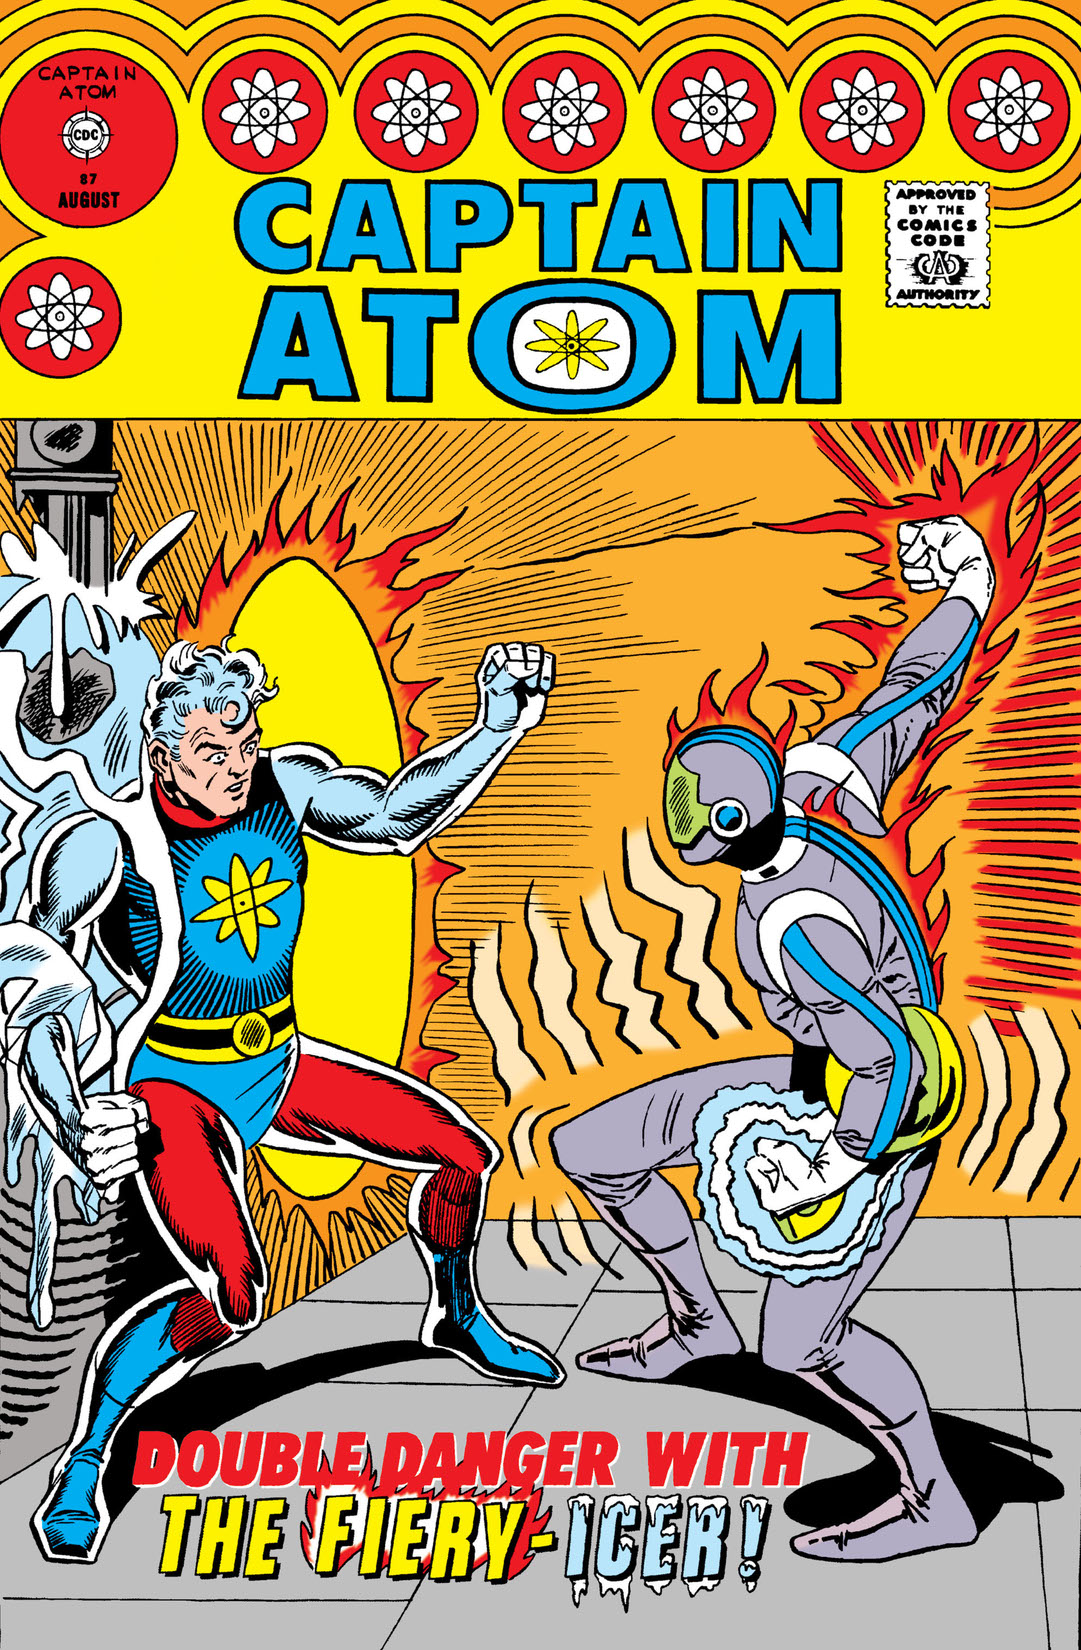 Captain Atom (1965-) #87 preview images